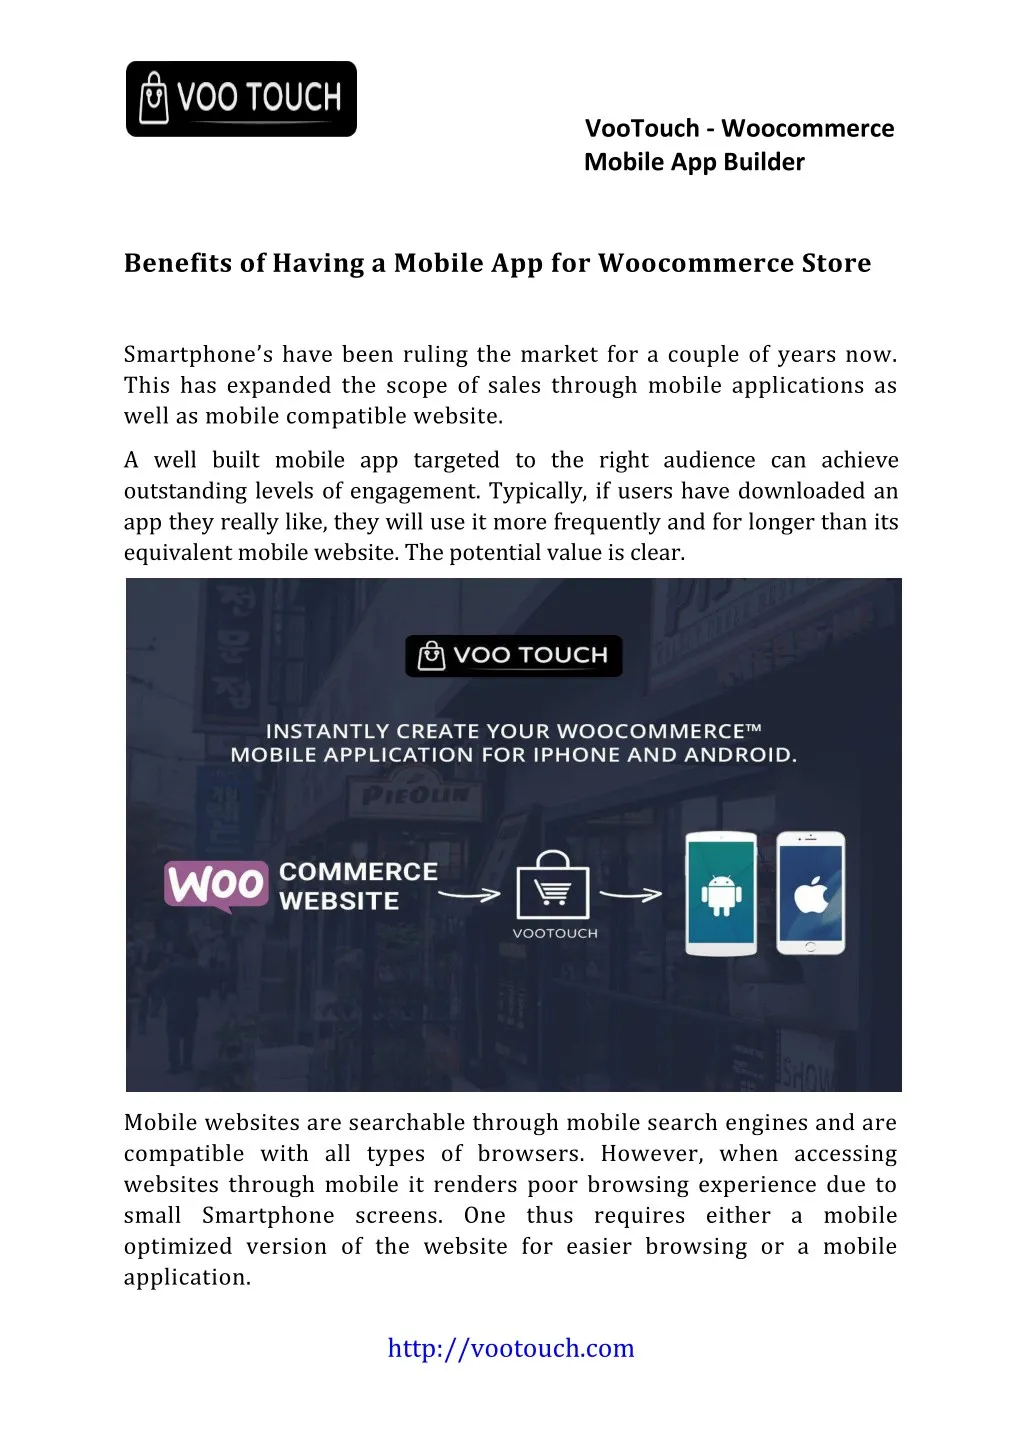 vootouch woocommerce mobile app builder benefits